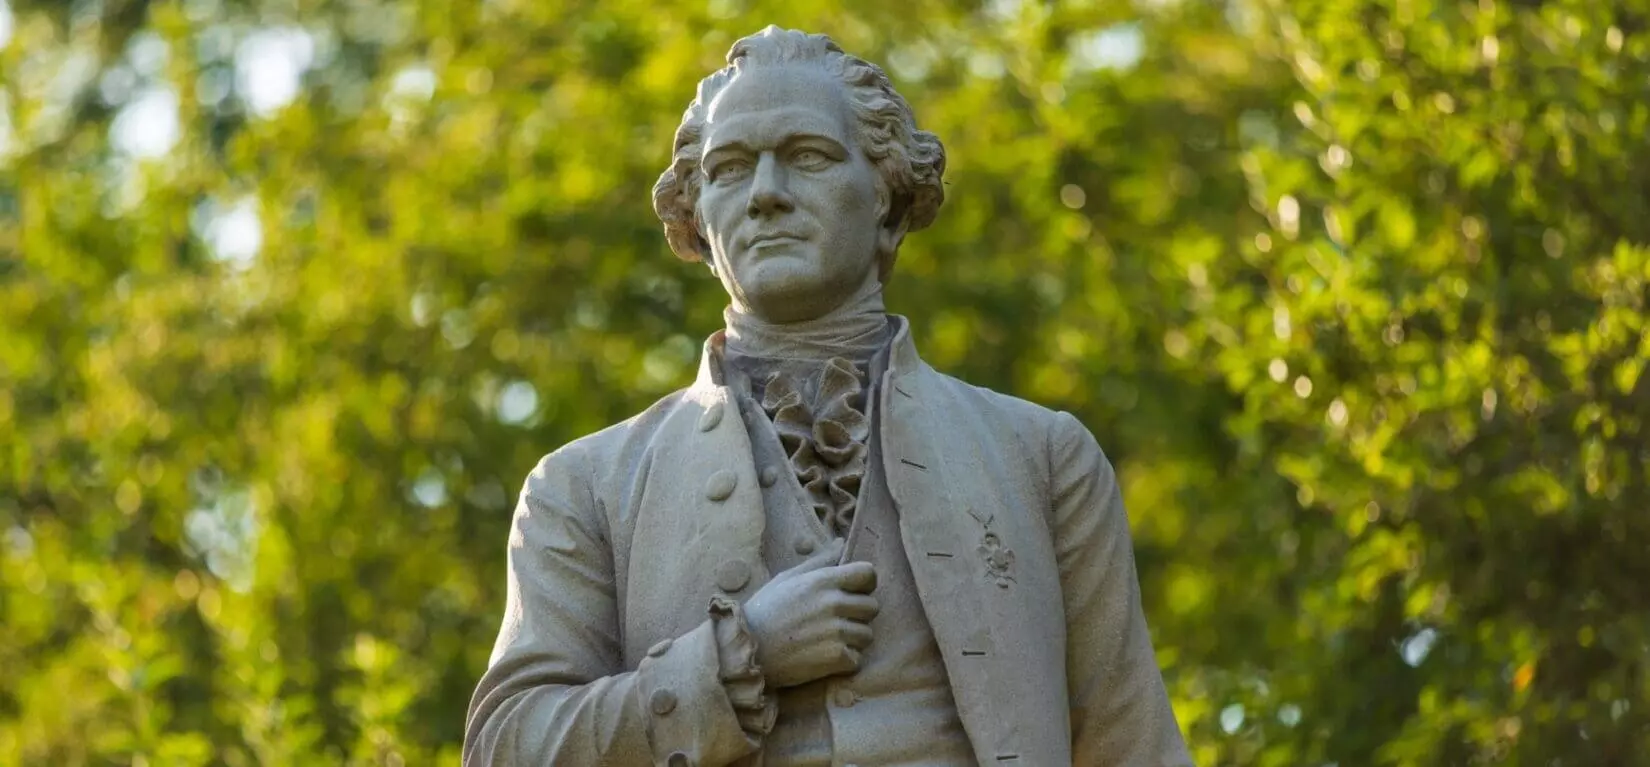 Alexander Hamilton: Why Civil Discourse Matters